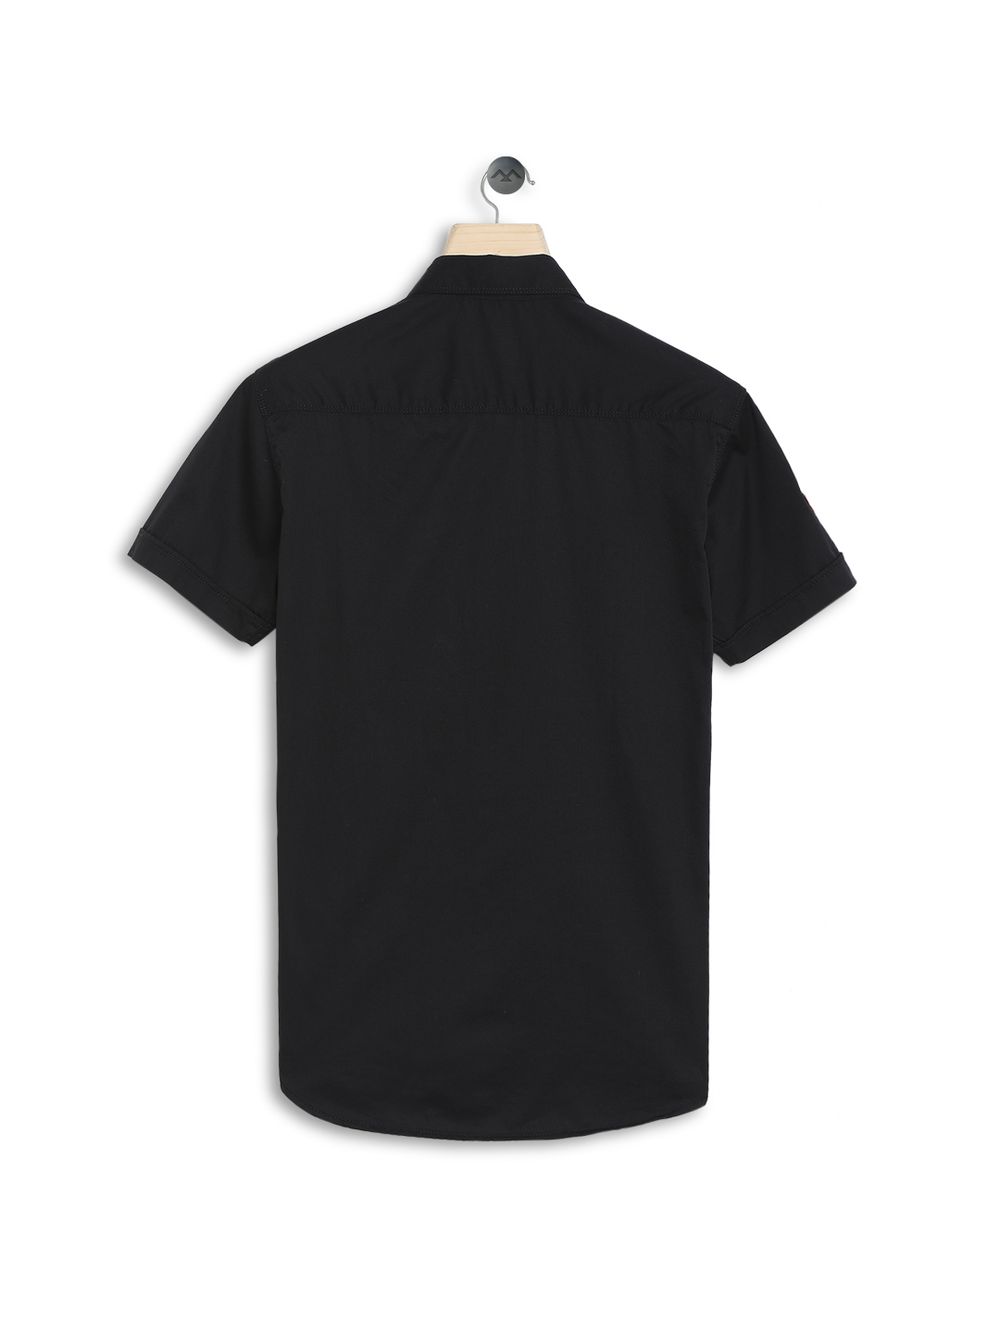 Black Badged Slim Fit Casual Shirt